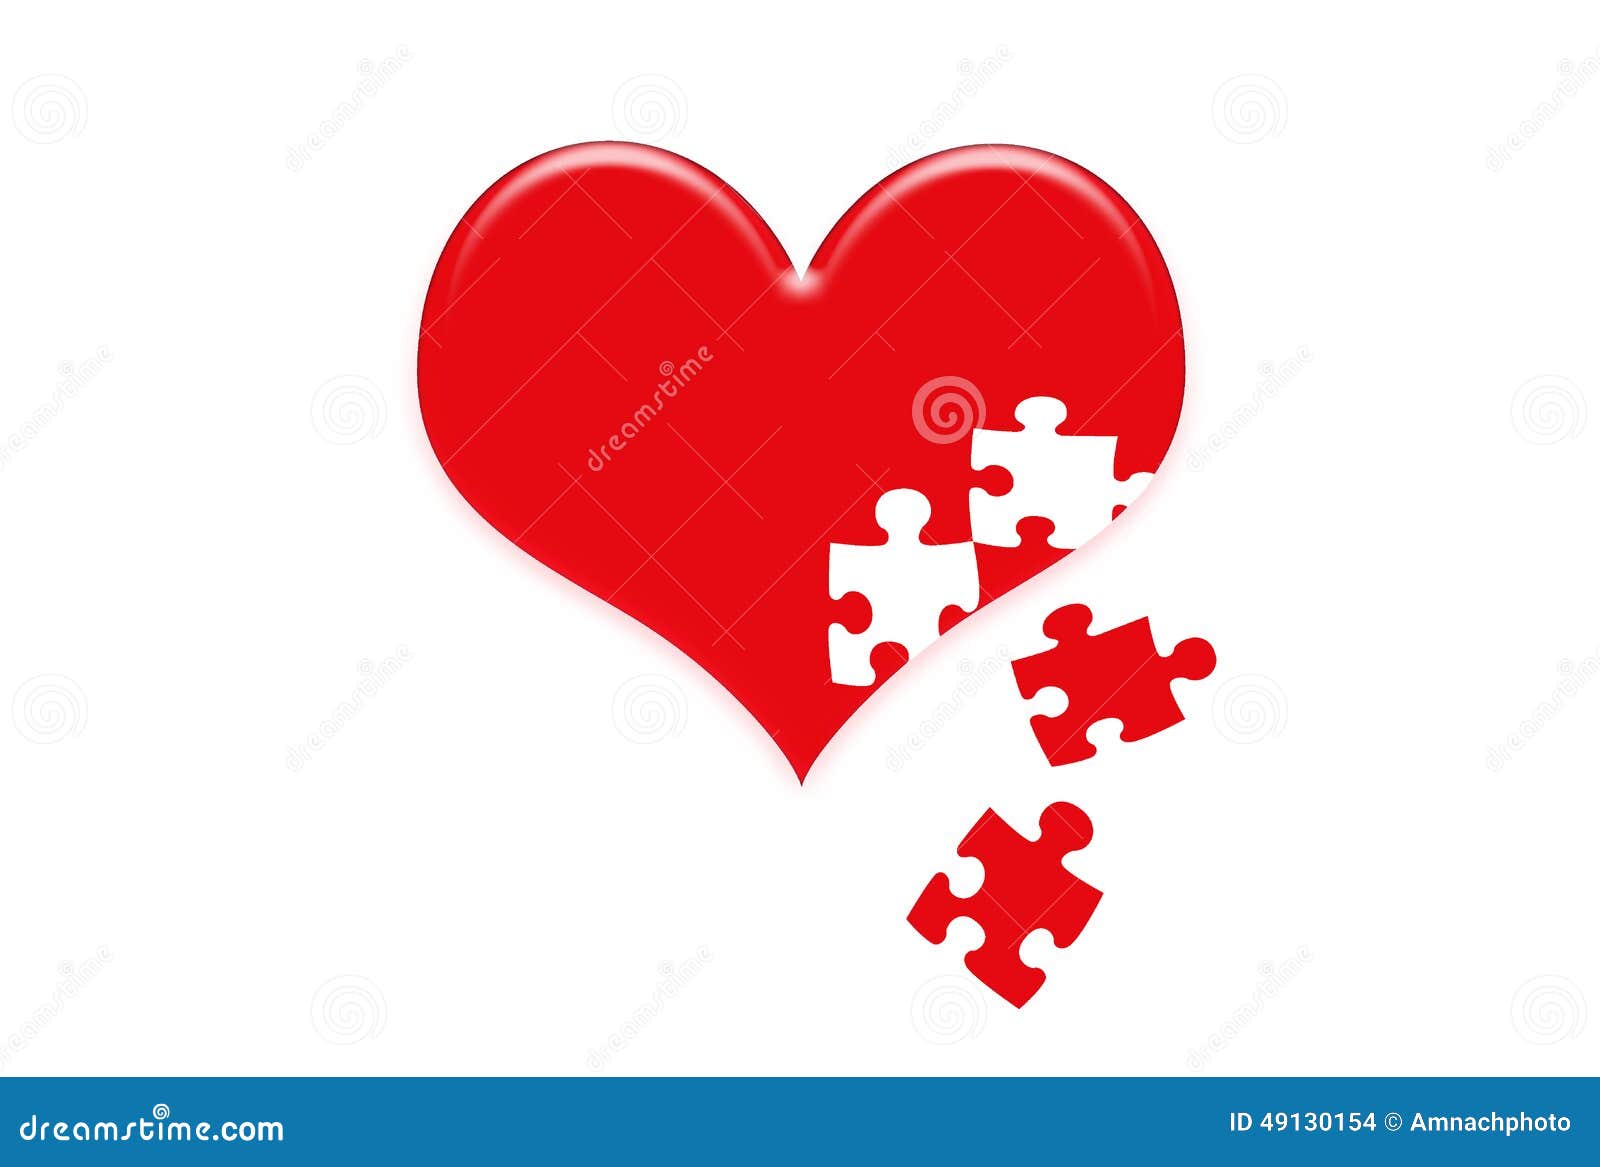 heart puzzle clipart - photo #40